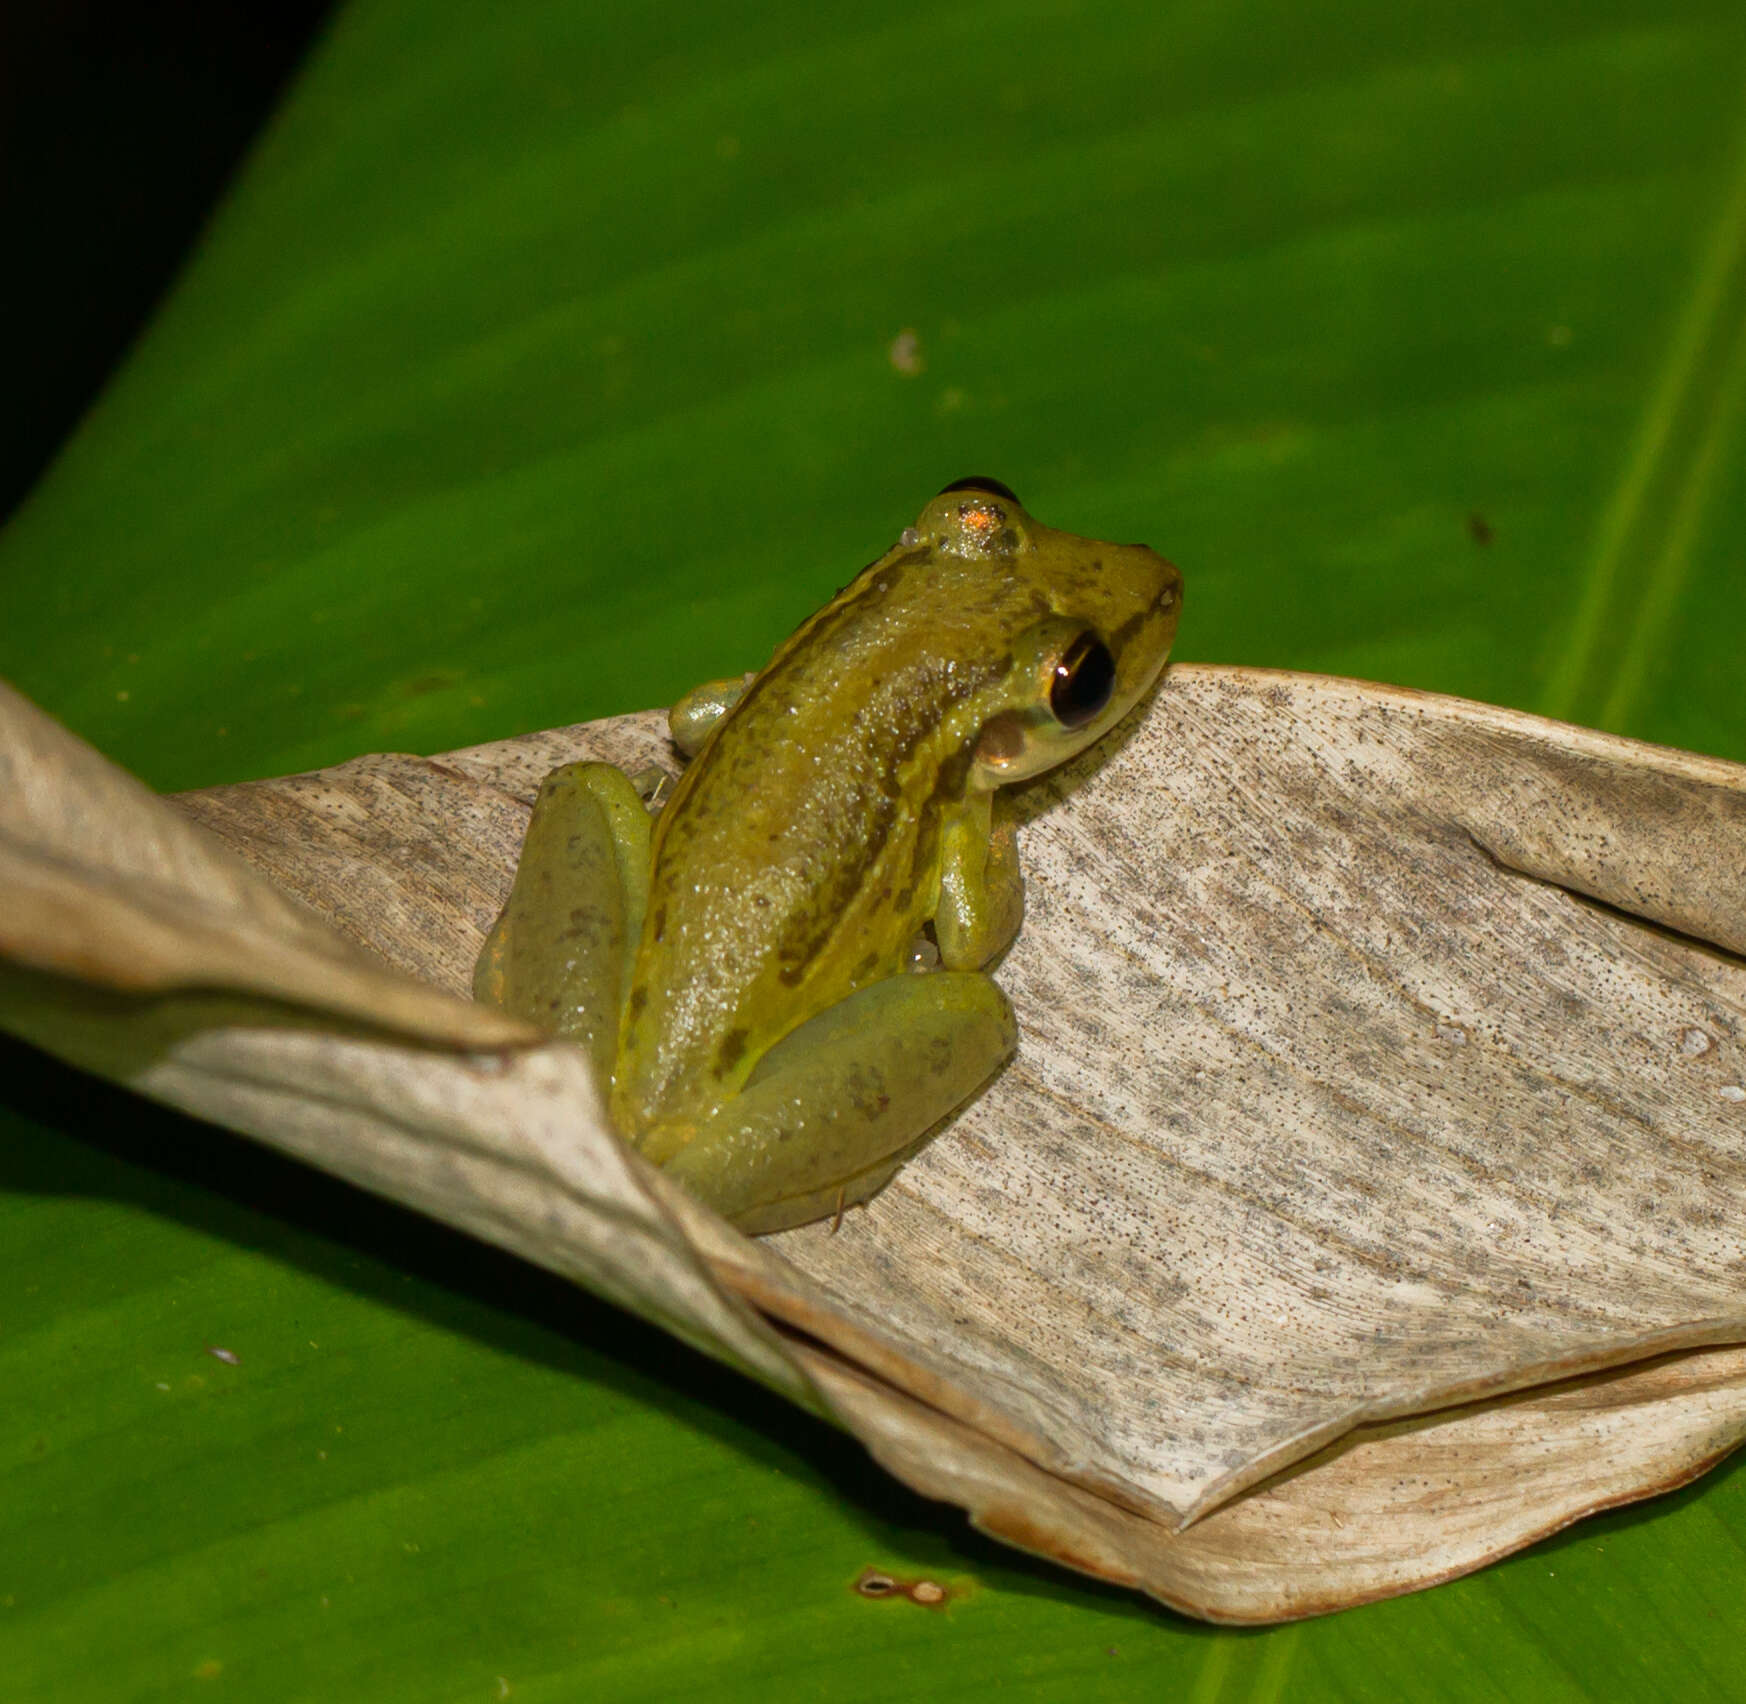 Image of Allen's Snouted Treefrog